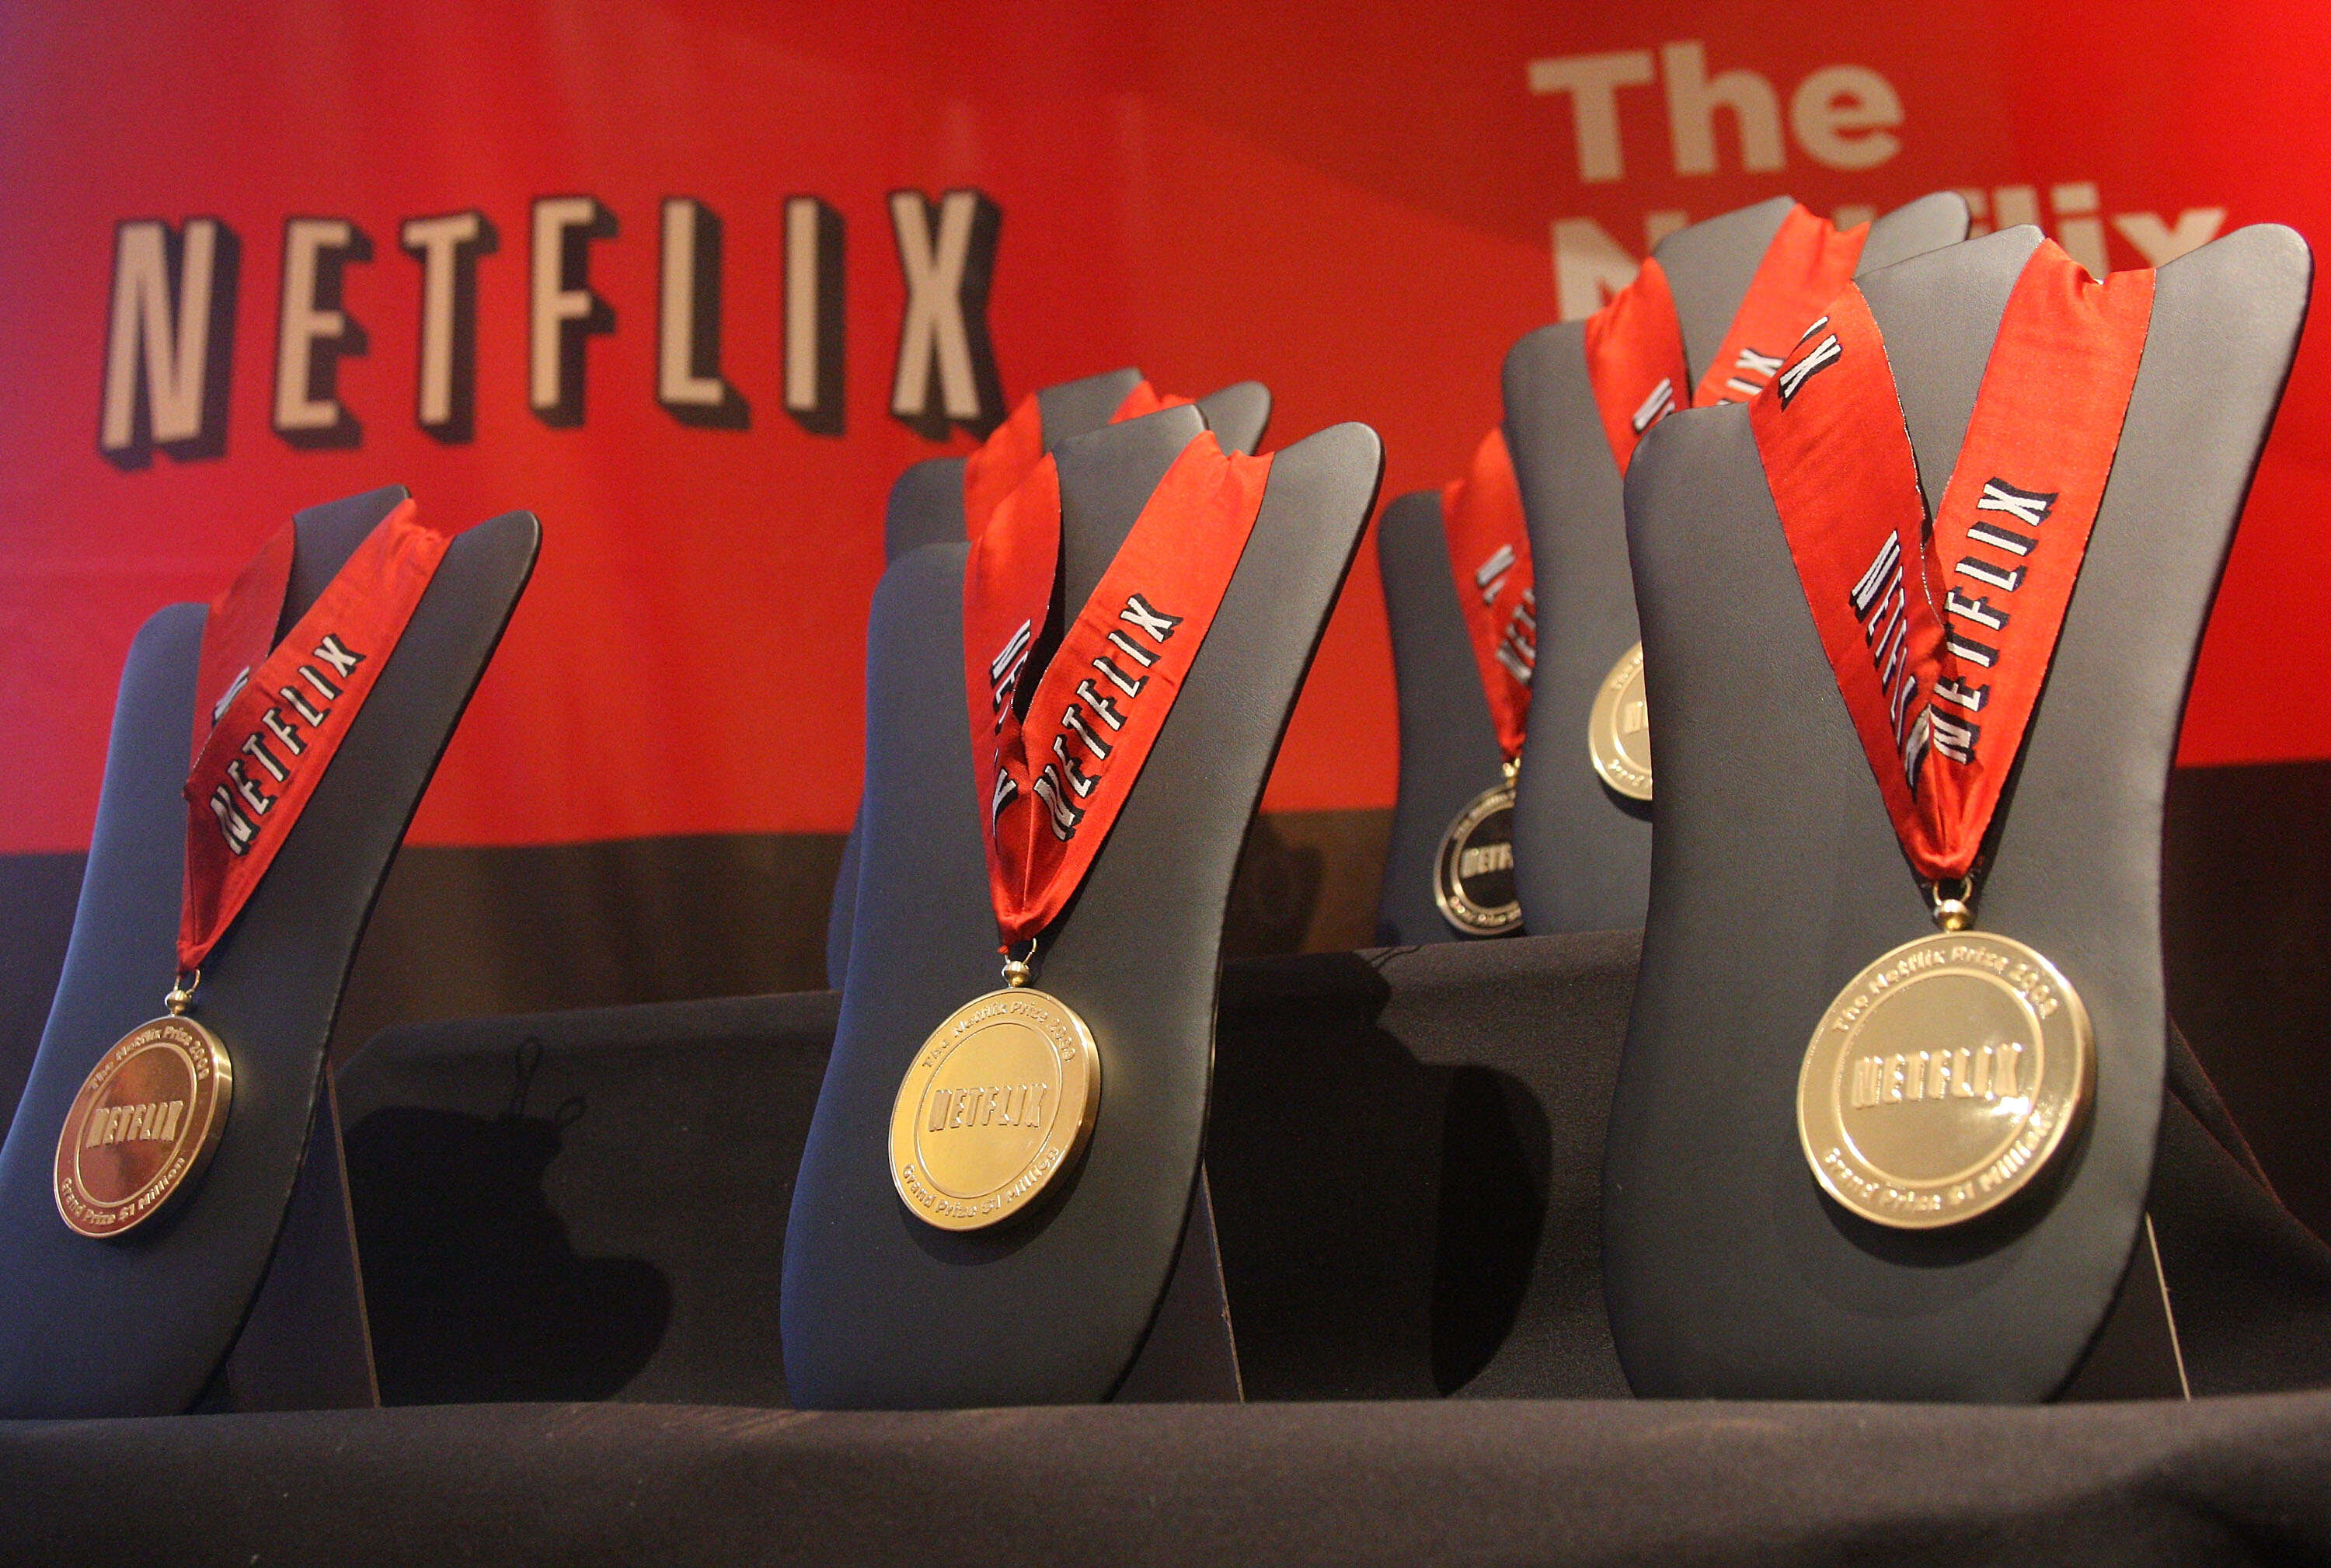 Netflix Prize Medals